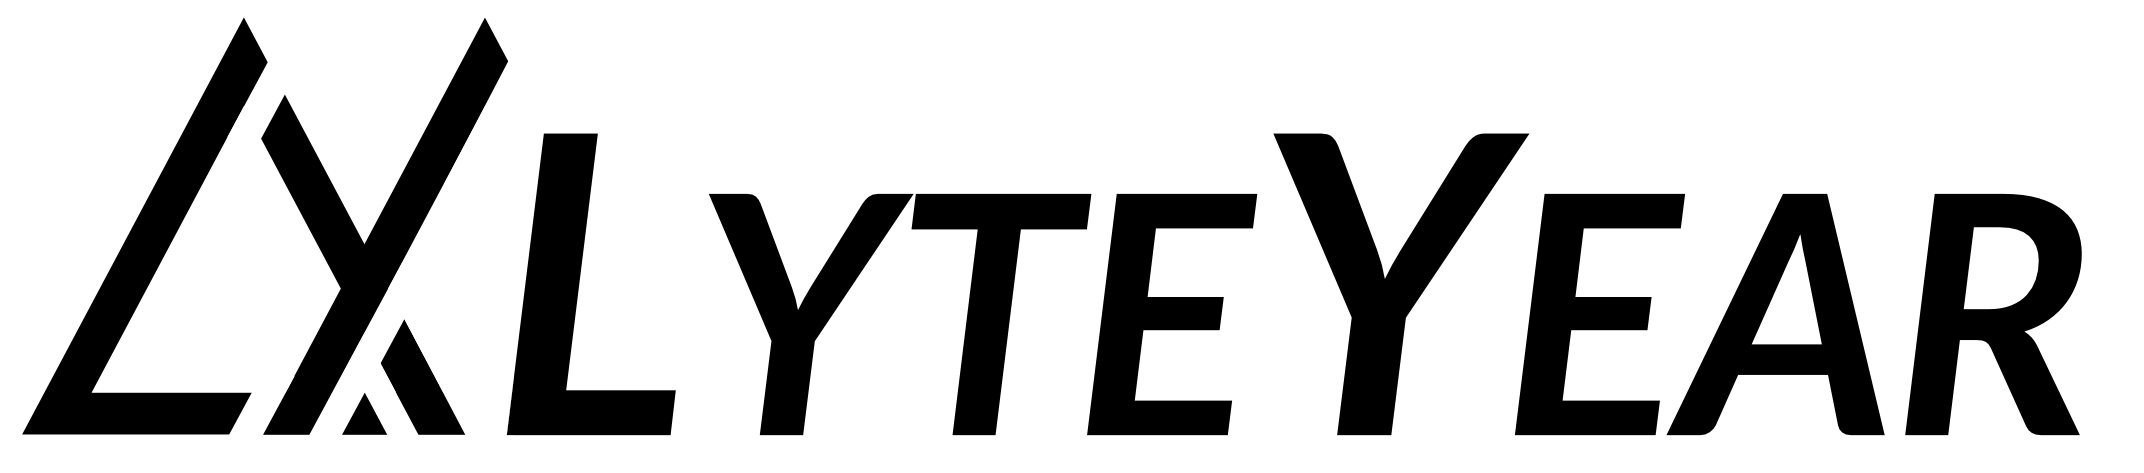 Lyte Year